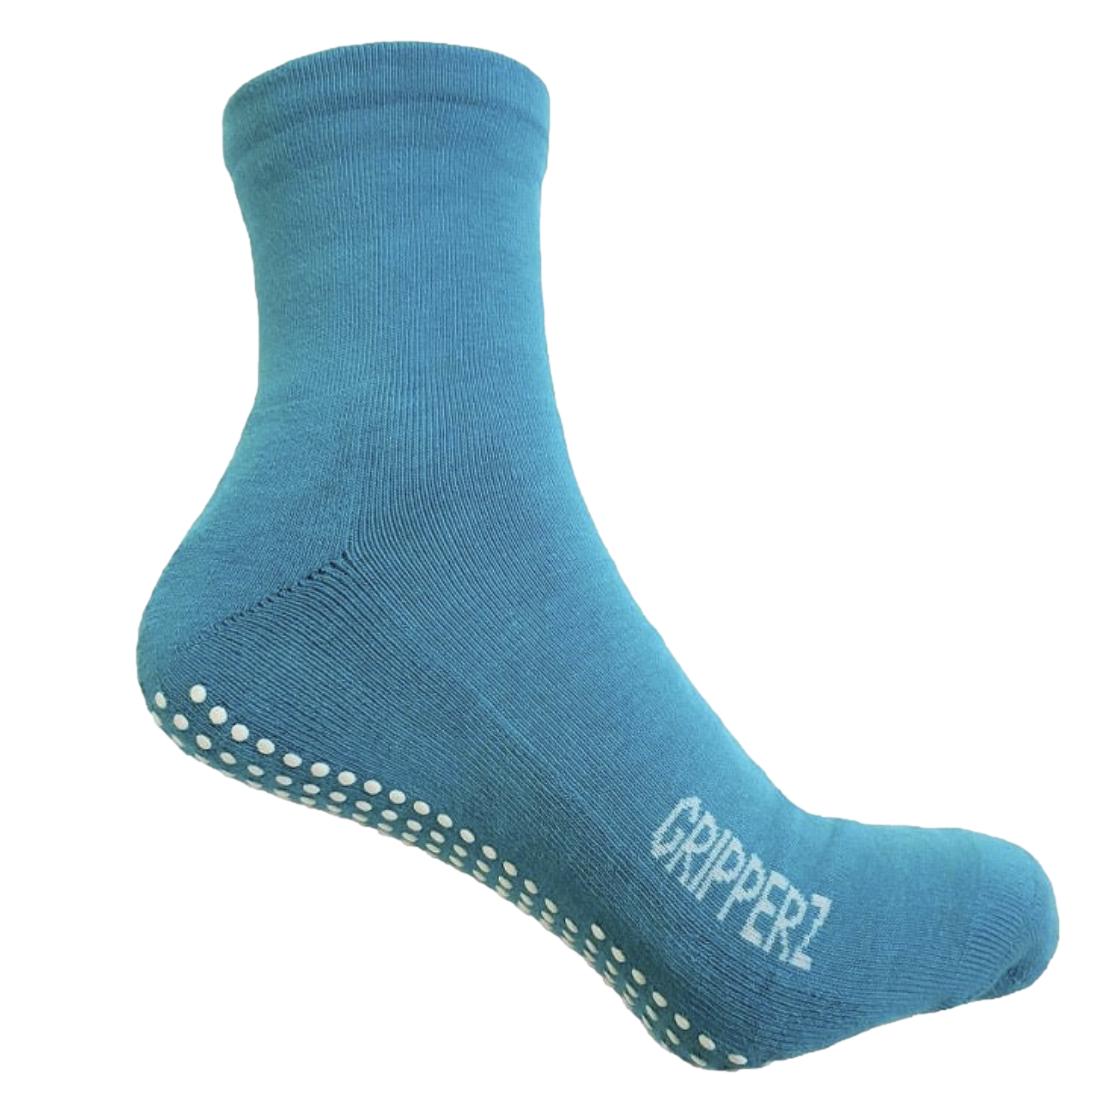 Hospital Socks / Non Slip Socks / Diabetic Safe Socks by Gripperz